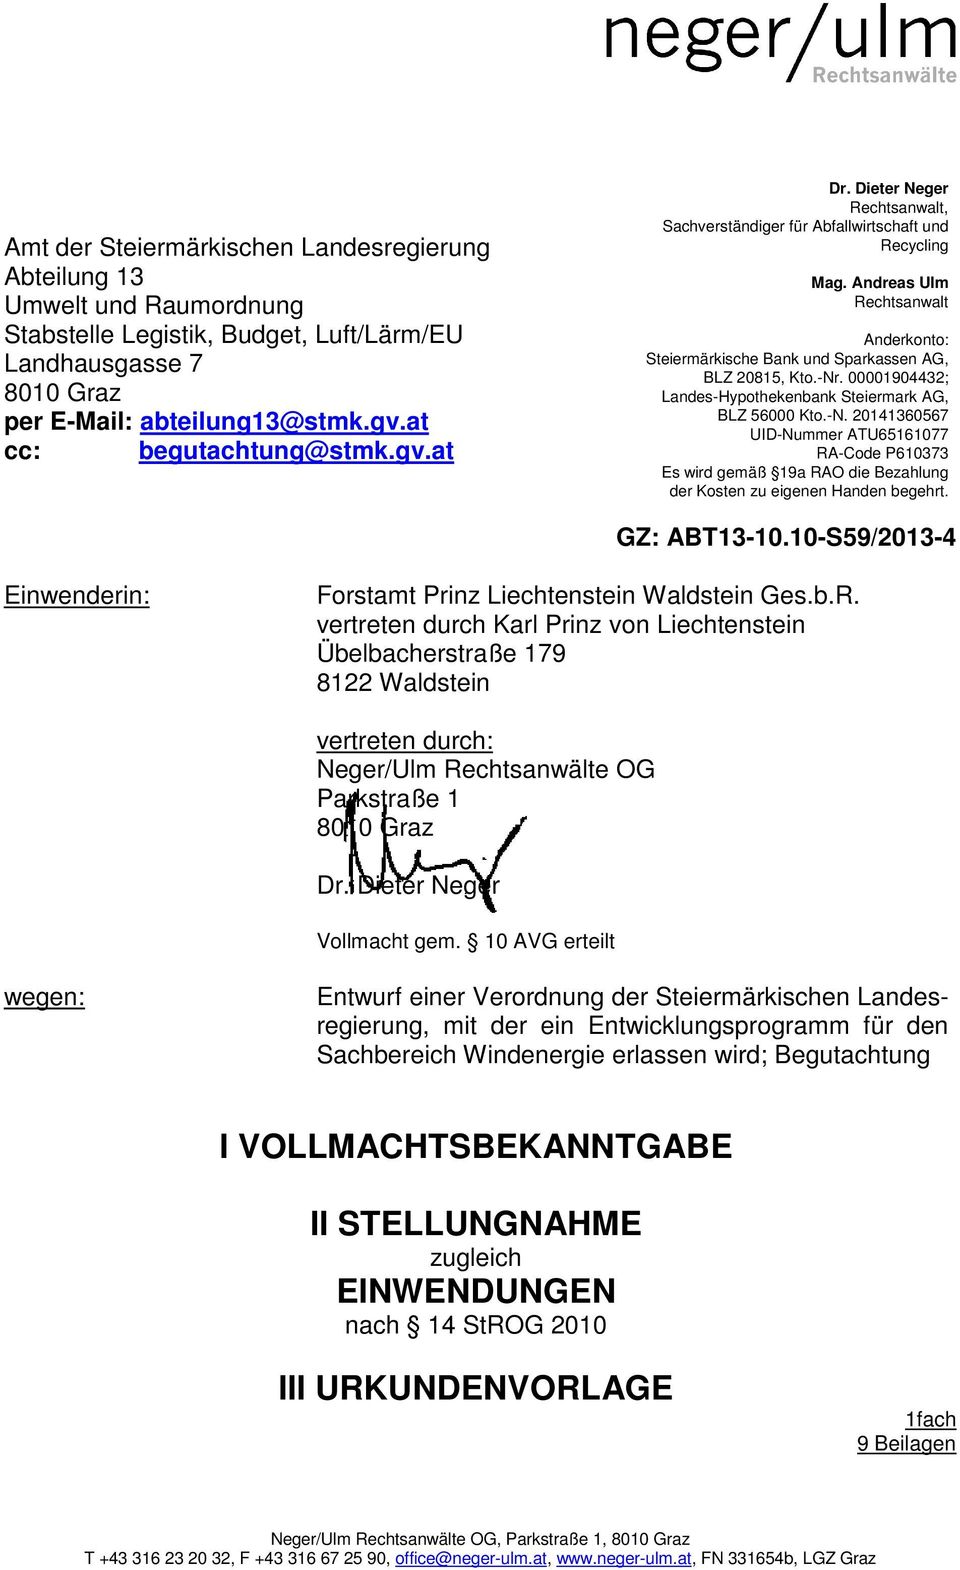 Andreas Ulm Rechtsanwalt Anderkonto: Steiermärkische Bank und Sparkassen AG, BLZ 20815, Kto.-Nr